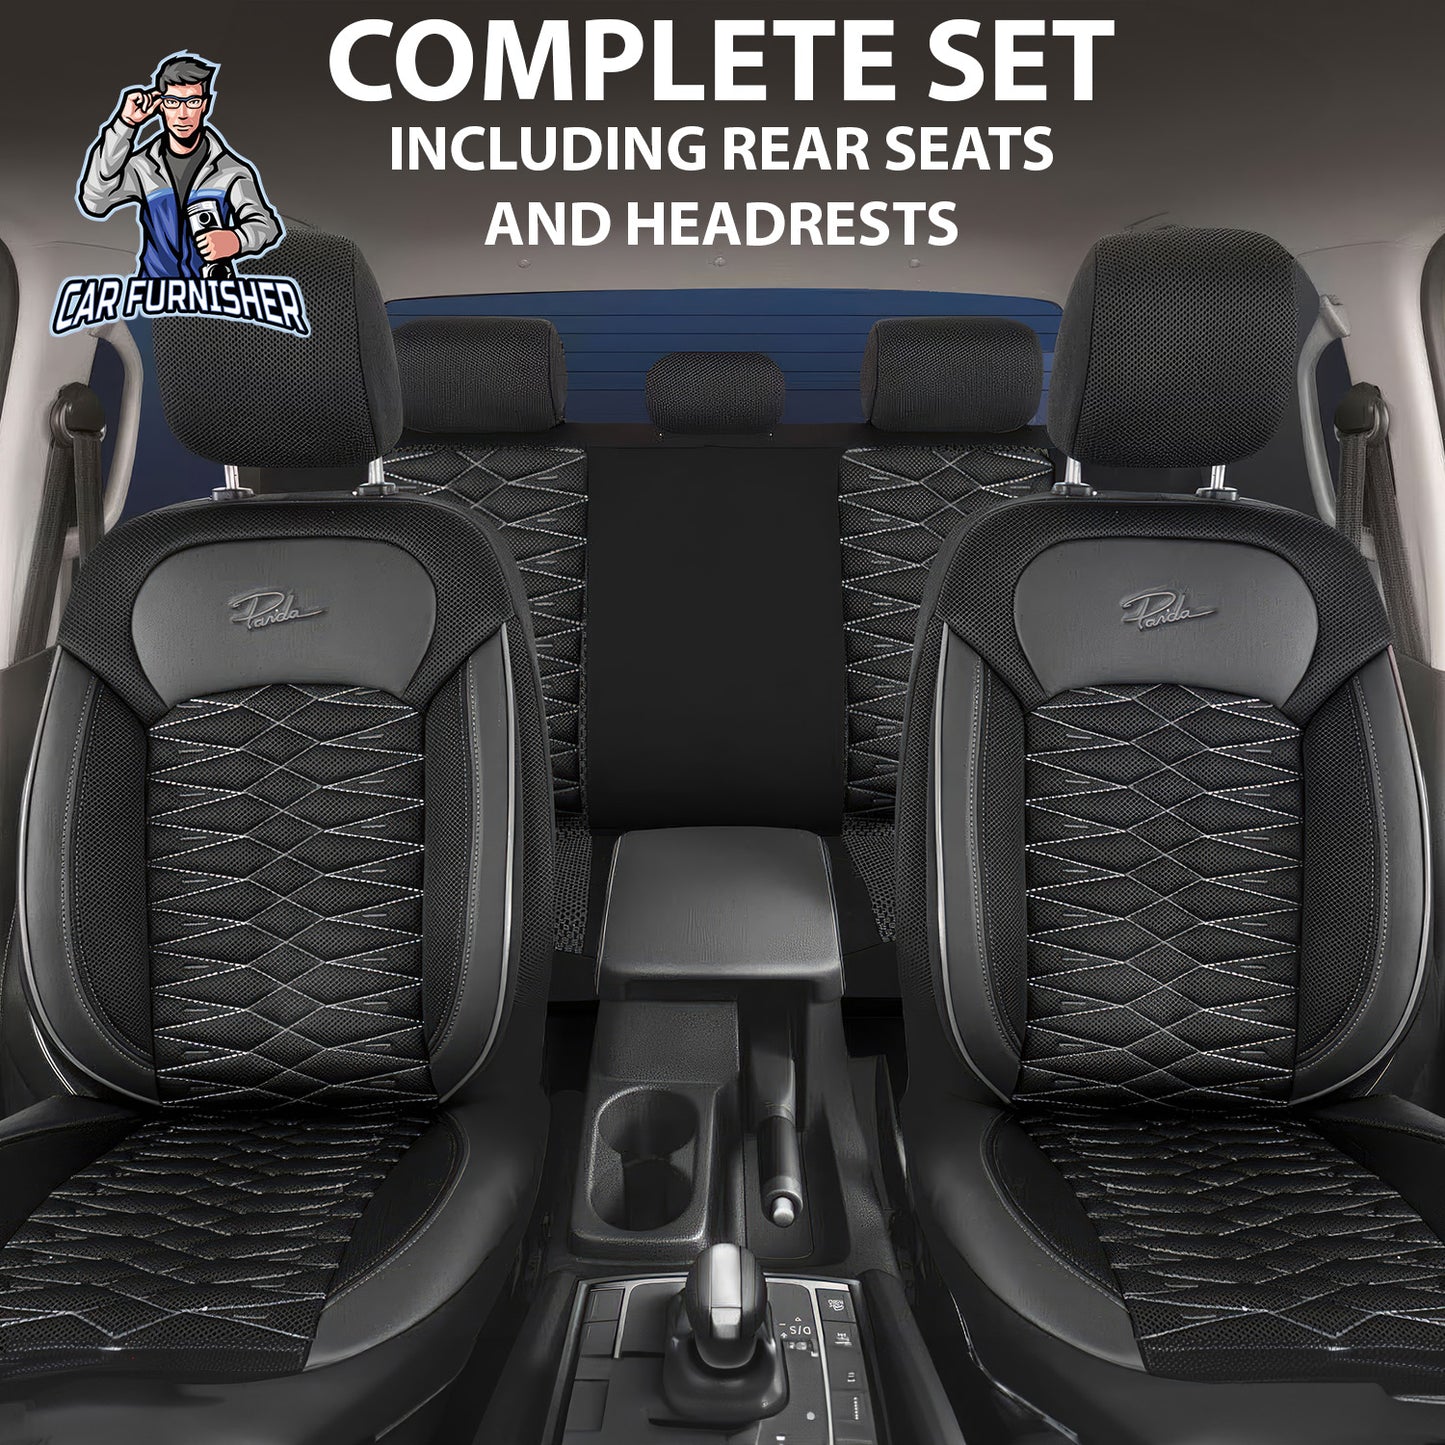 Car Seat Cover Set - Madrid Design Gray 5 Seats + Headrests (Full Set) Leather & Mesh Fabric